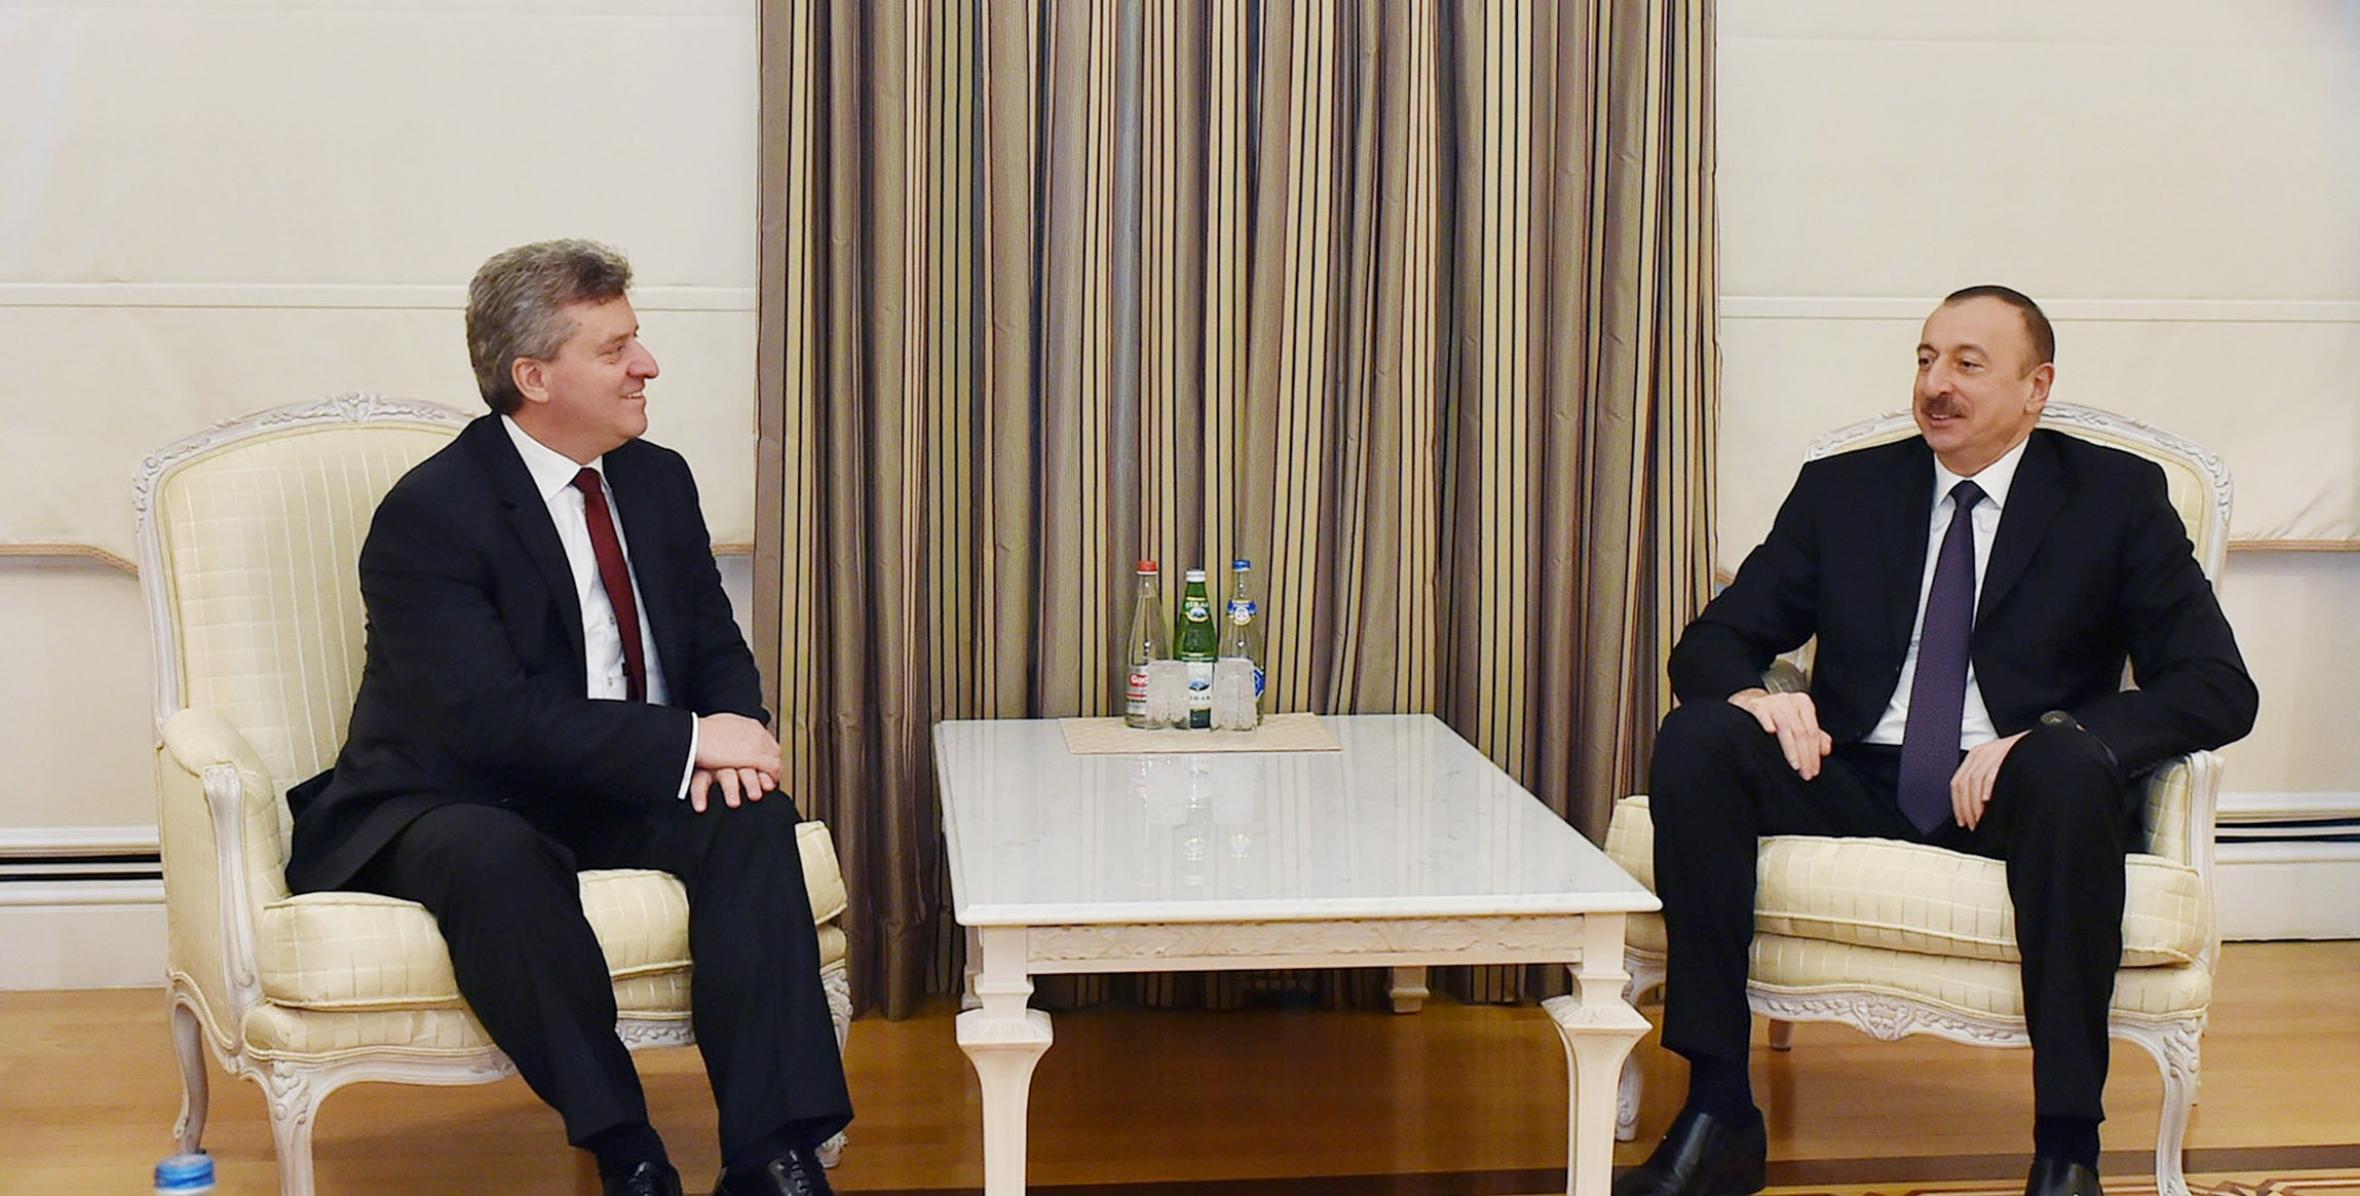 Ilham Aliyev met with Macedonian President Gjorge Ivanov